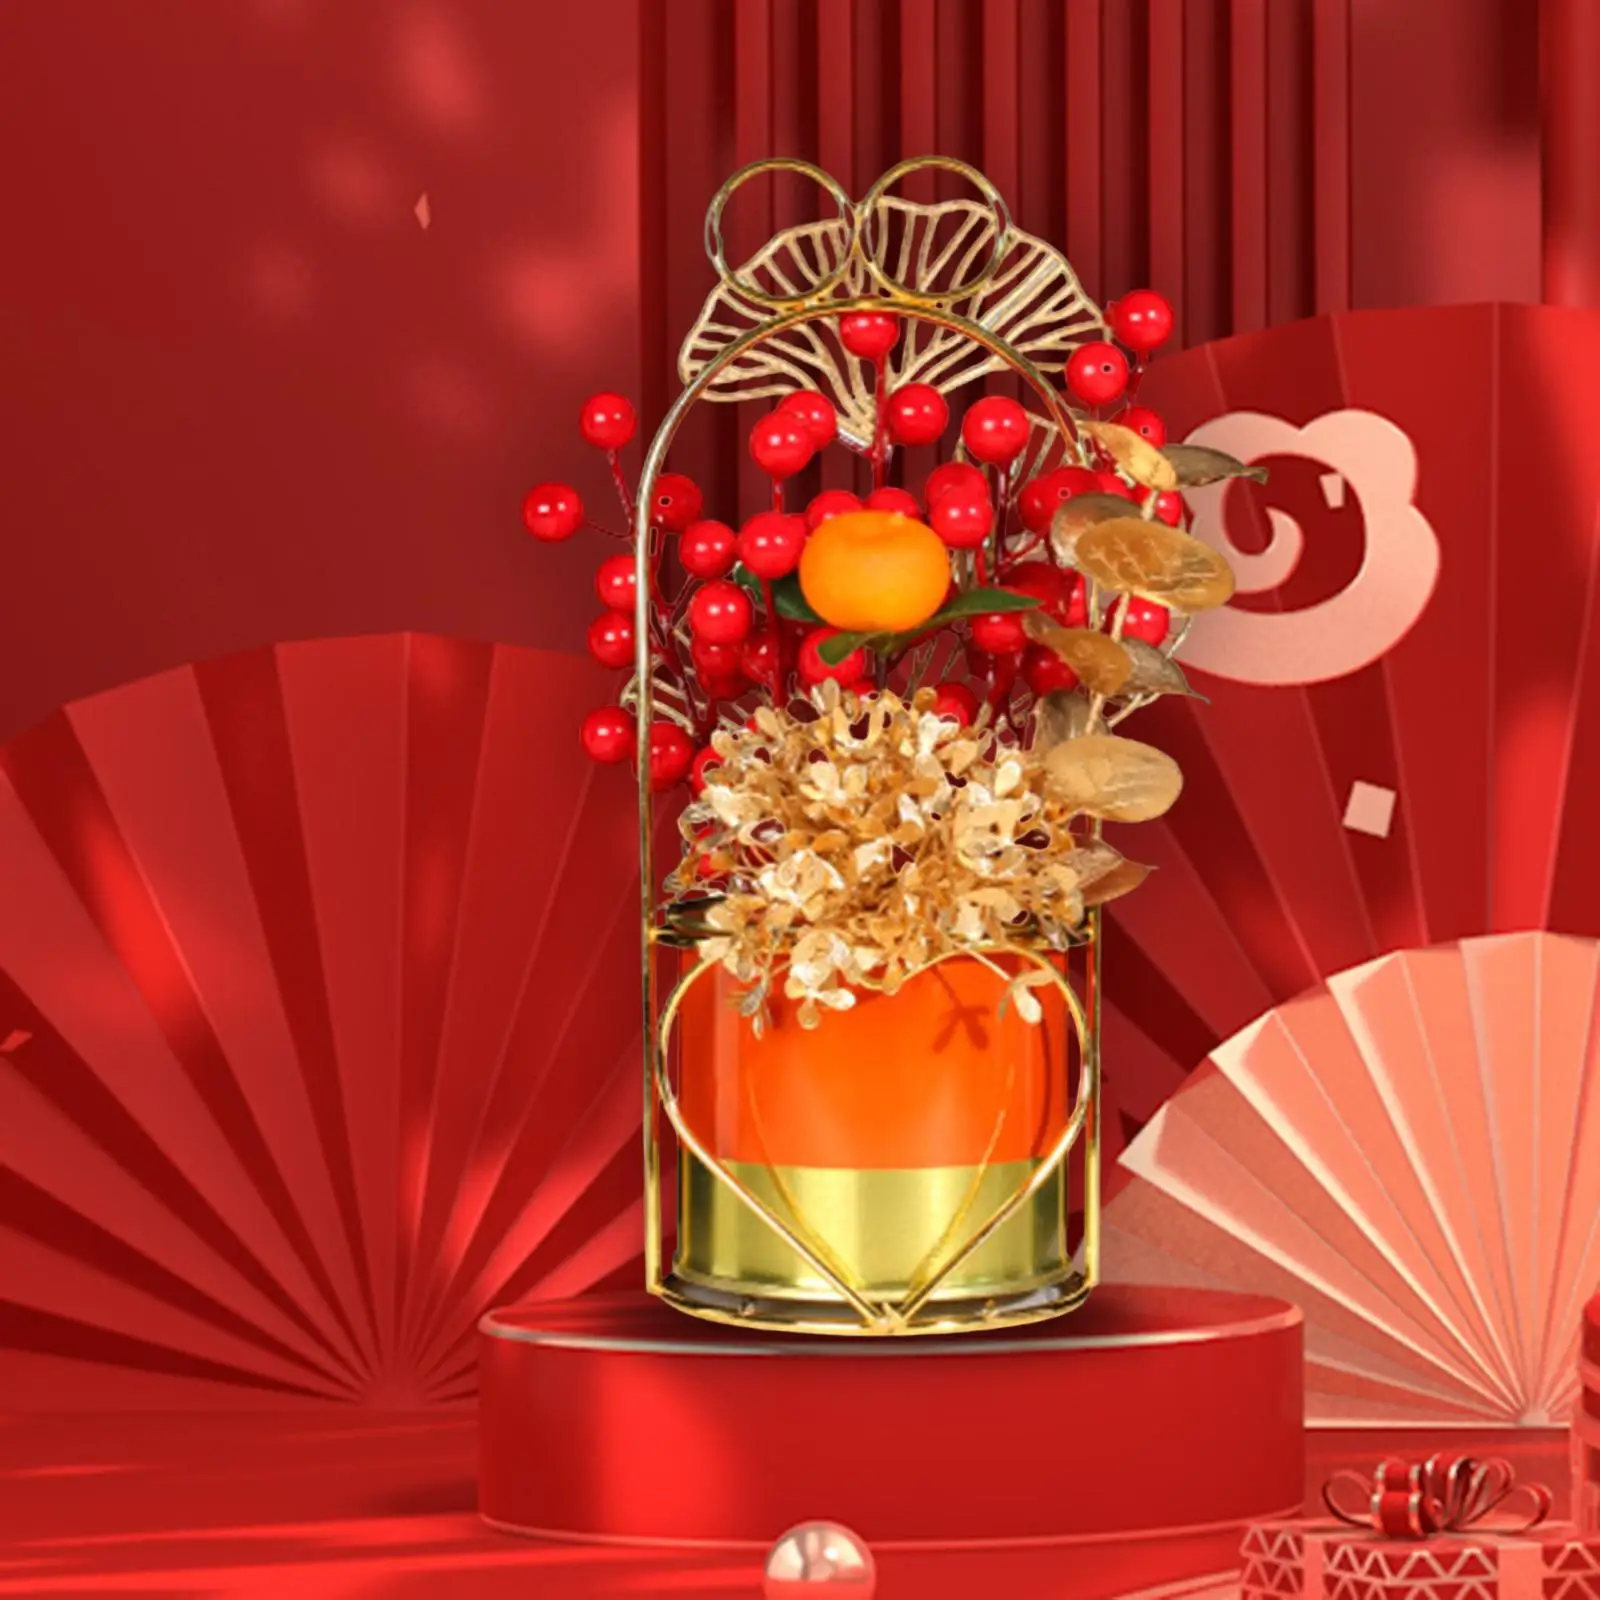 Flower Basket Festival Table Centerpiece Fruit Scene Layout Desktop Ornament Art Red for Wedding Home Living Room Indoor Autumn